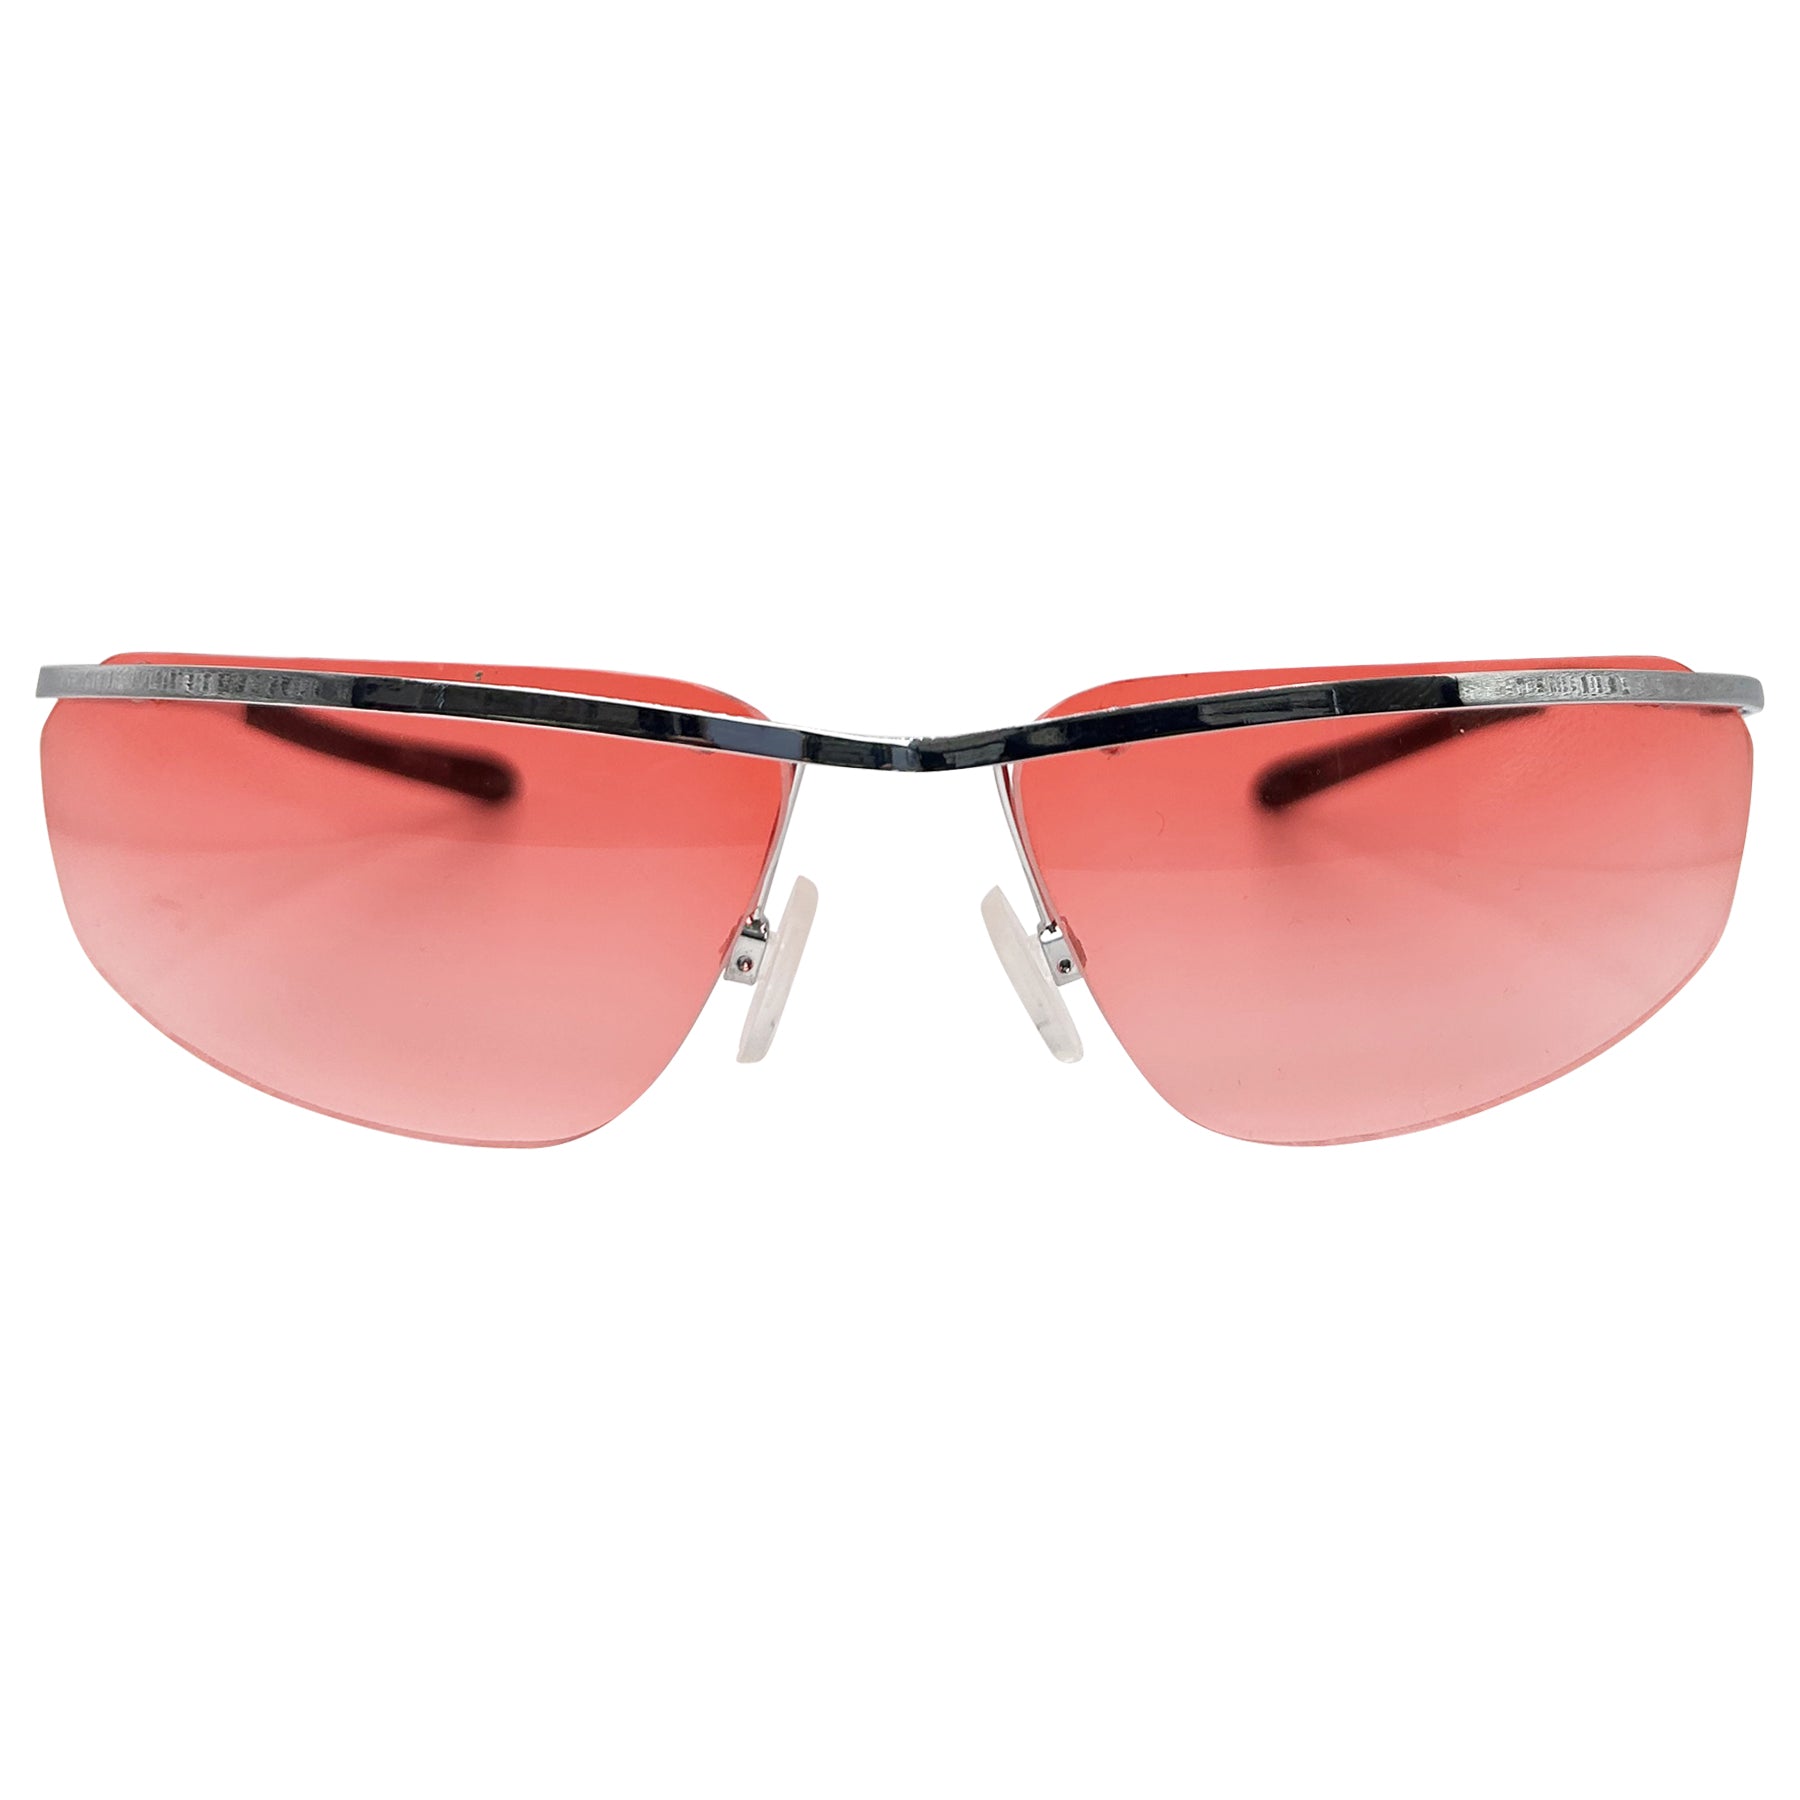 wraparound red sunglasses with a rimless metal frame 